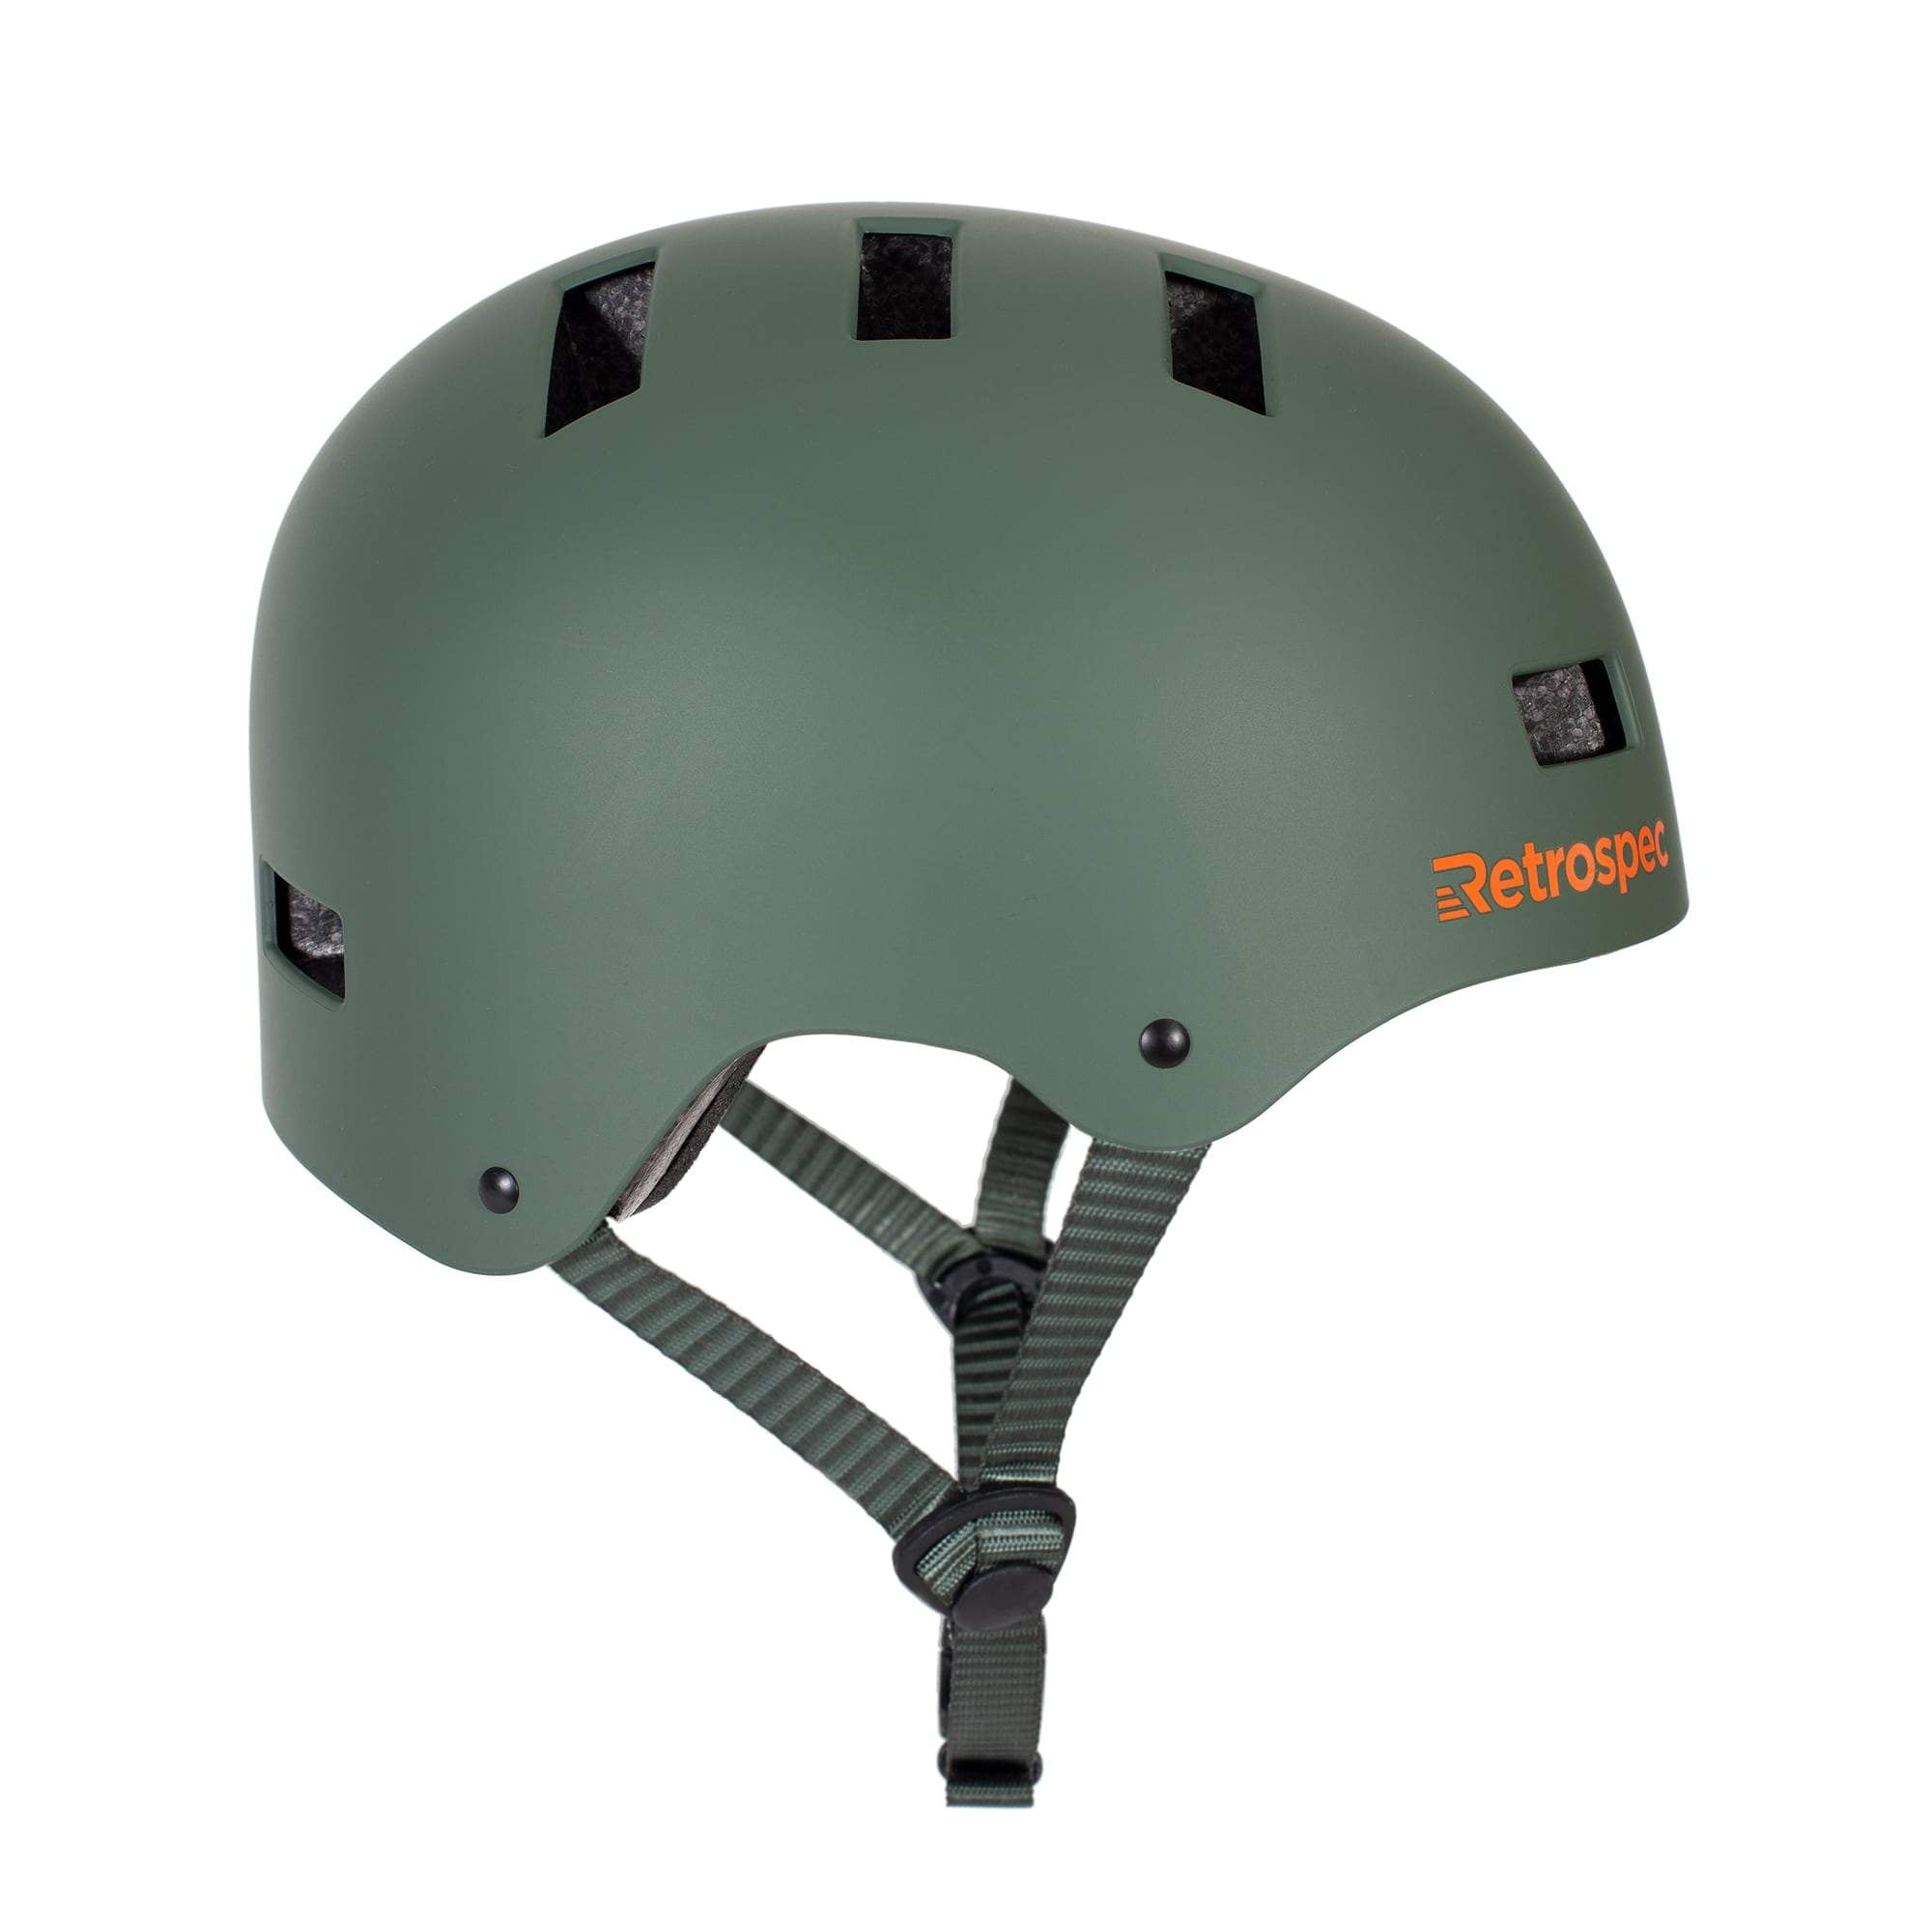 Retrospec CM-1 Classic Commuter Bike//Skate//Multi-Sport Helmet with 10 Vents